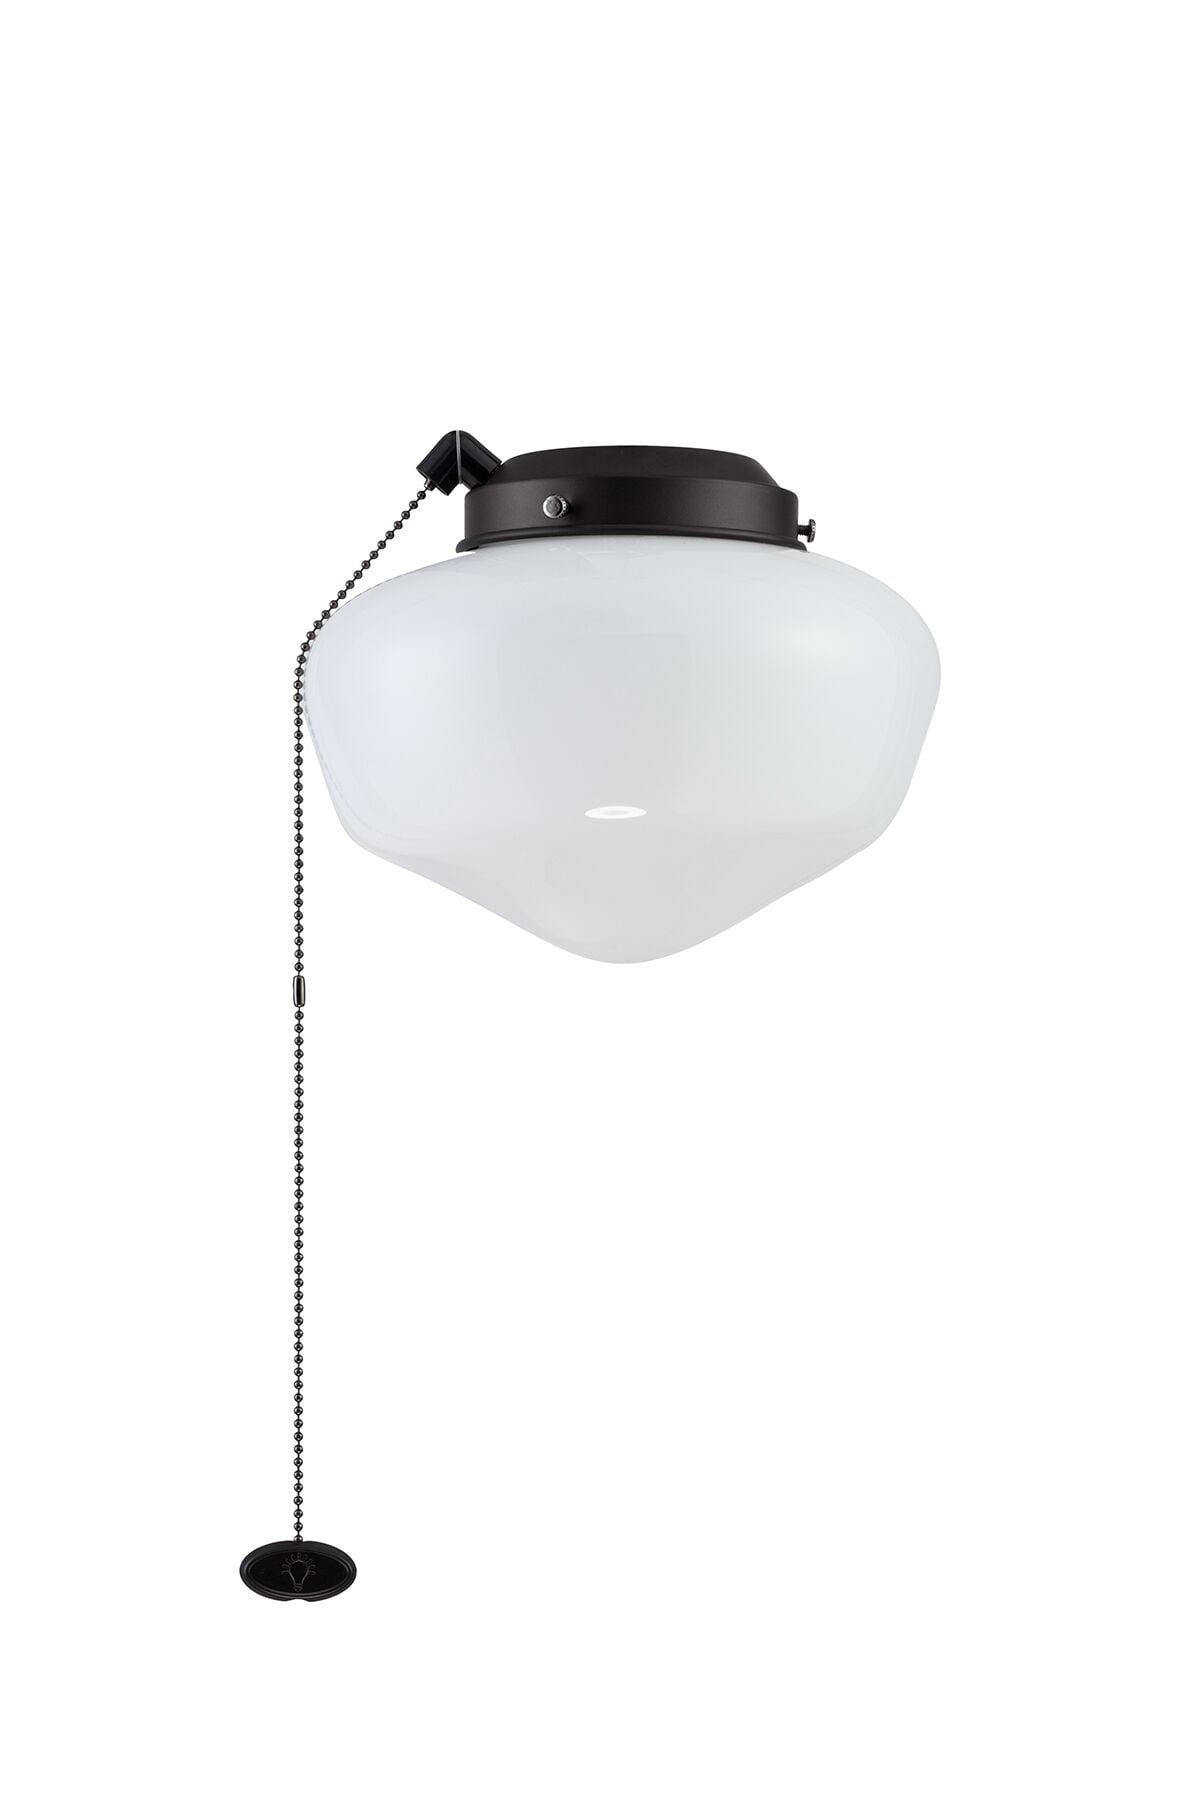 Universal Ceiling Fan Light Kit w/ 4 lights & Pull Chain White Standard Bulbs 